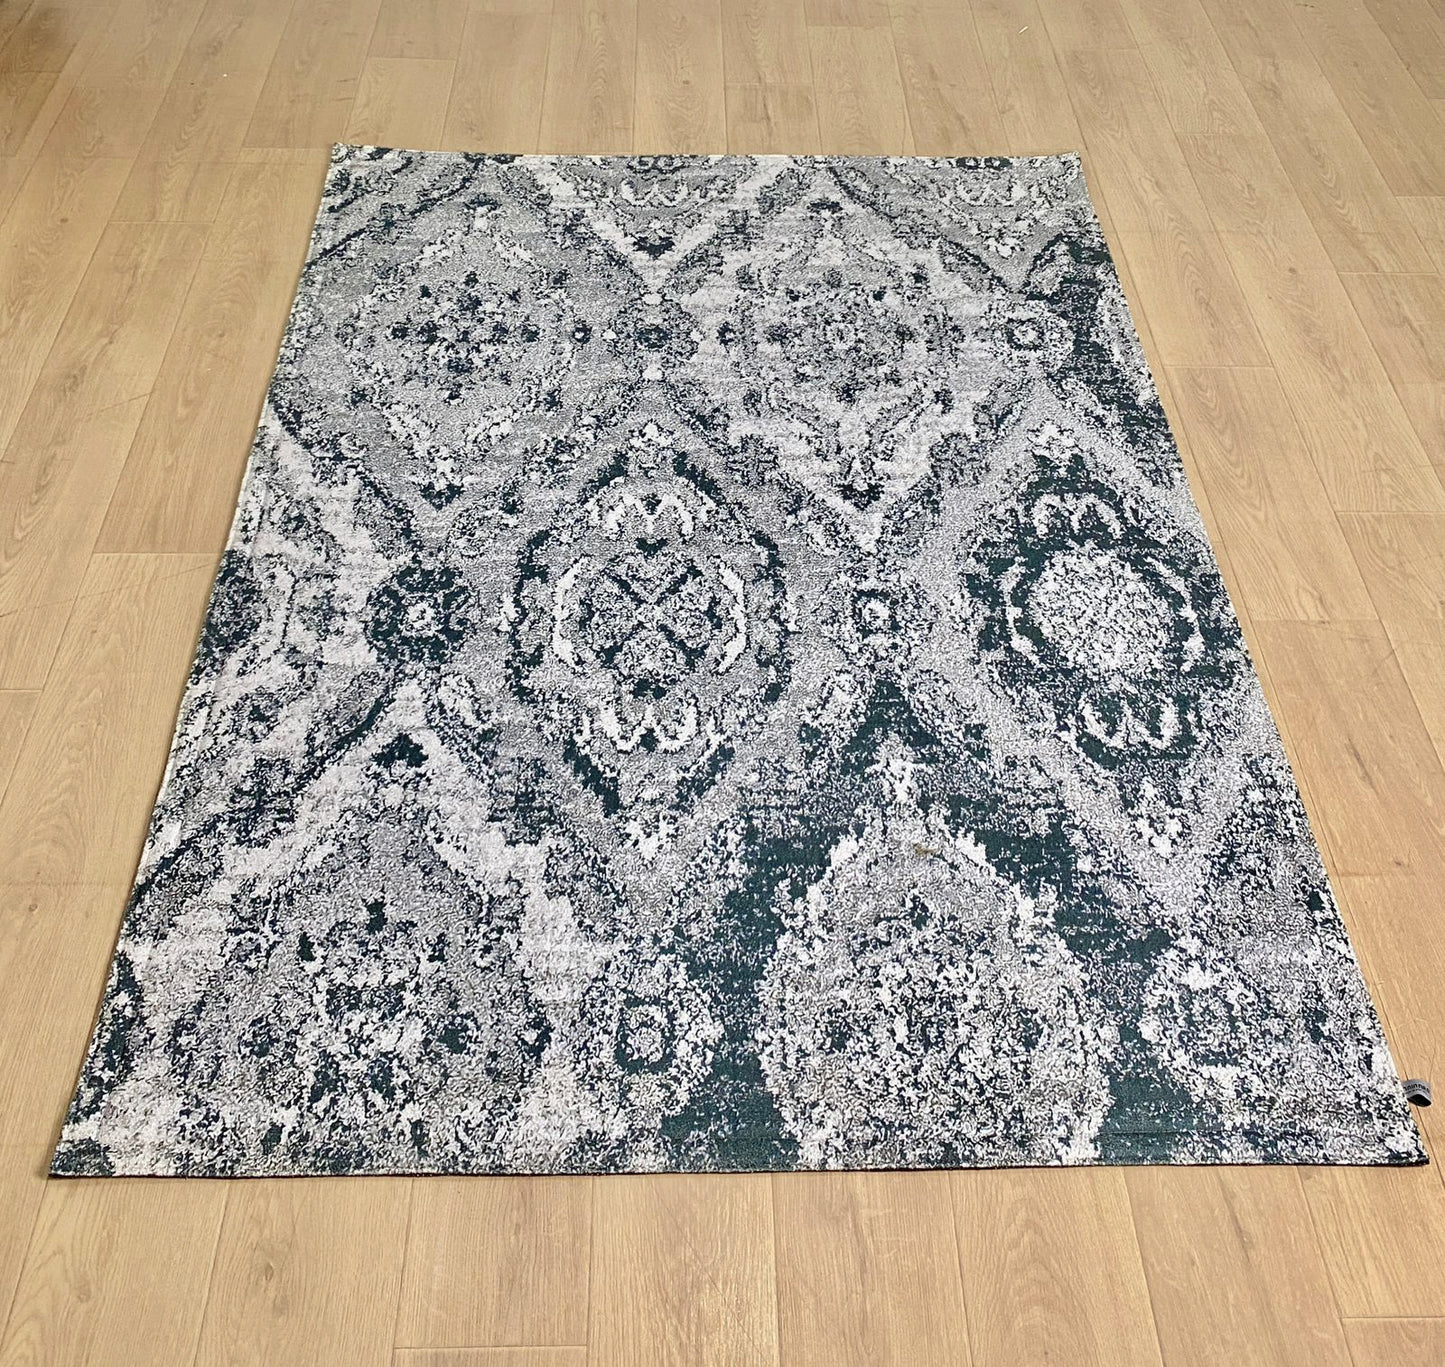 READY karpet tradisional ( 130 X 190 CM ) - BK4